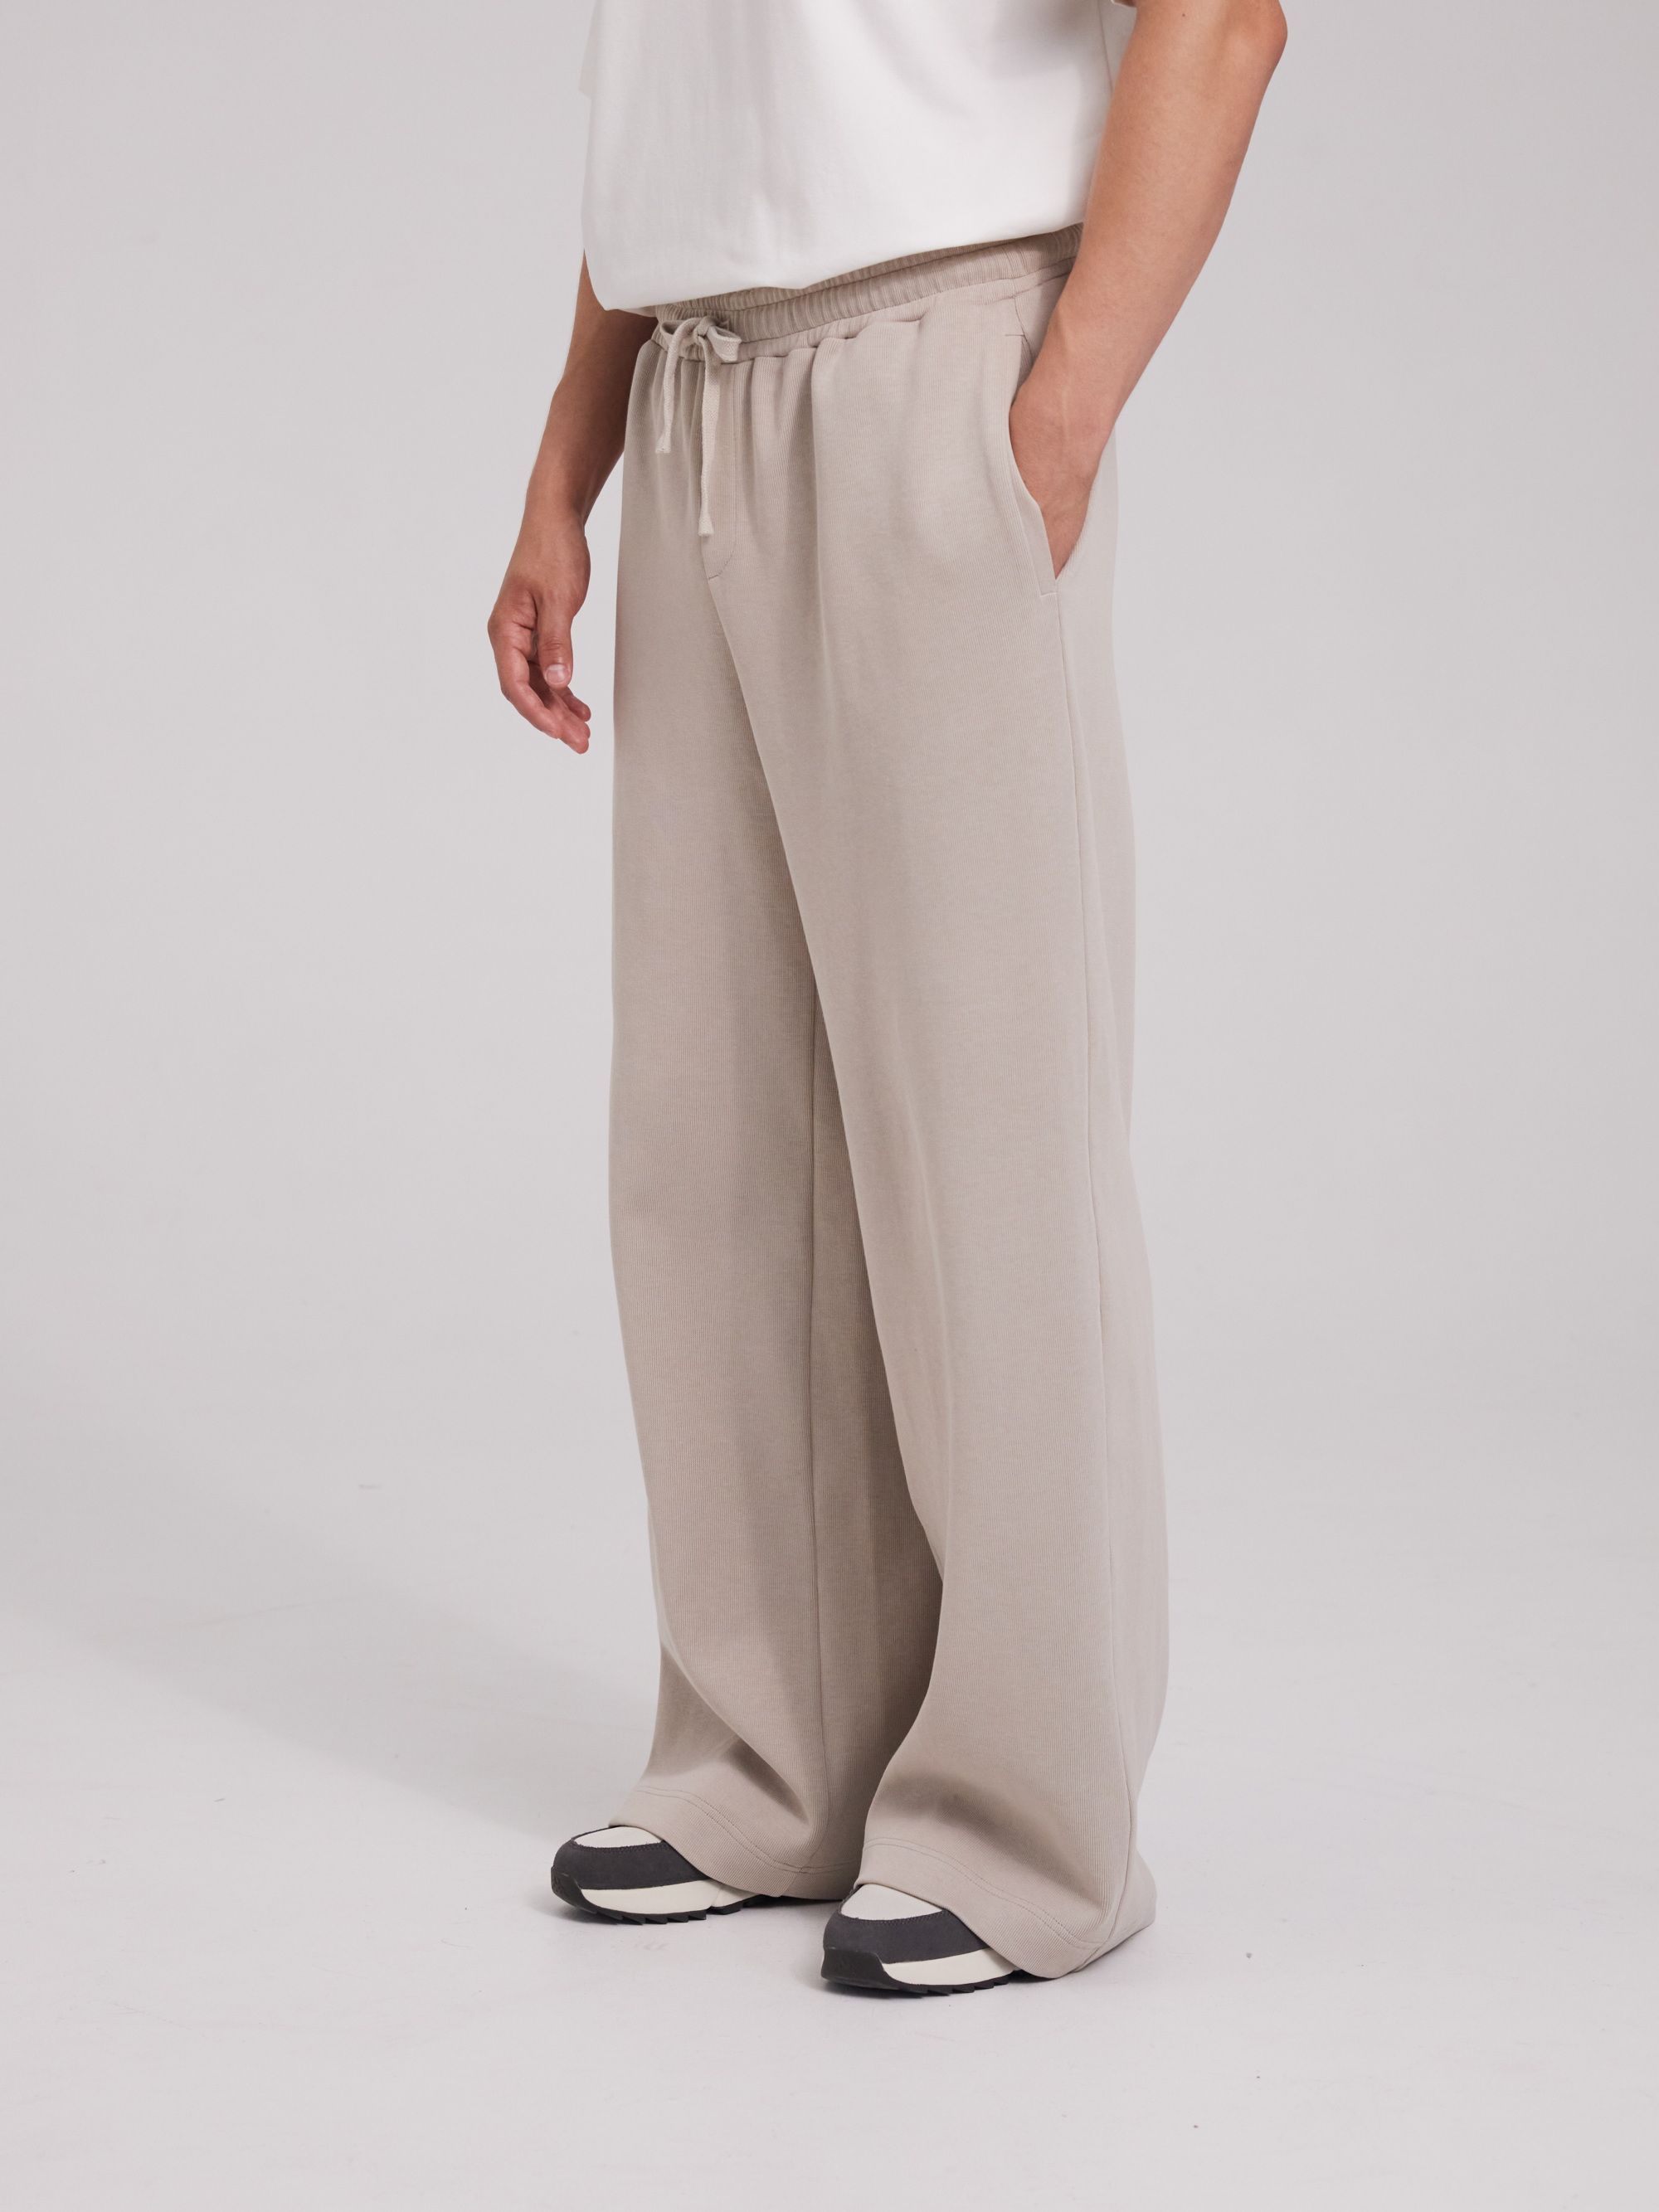 Trousers, pattern №1054 buy on-line